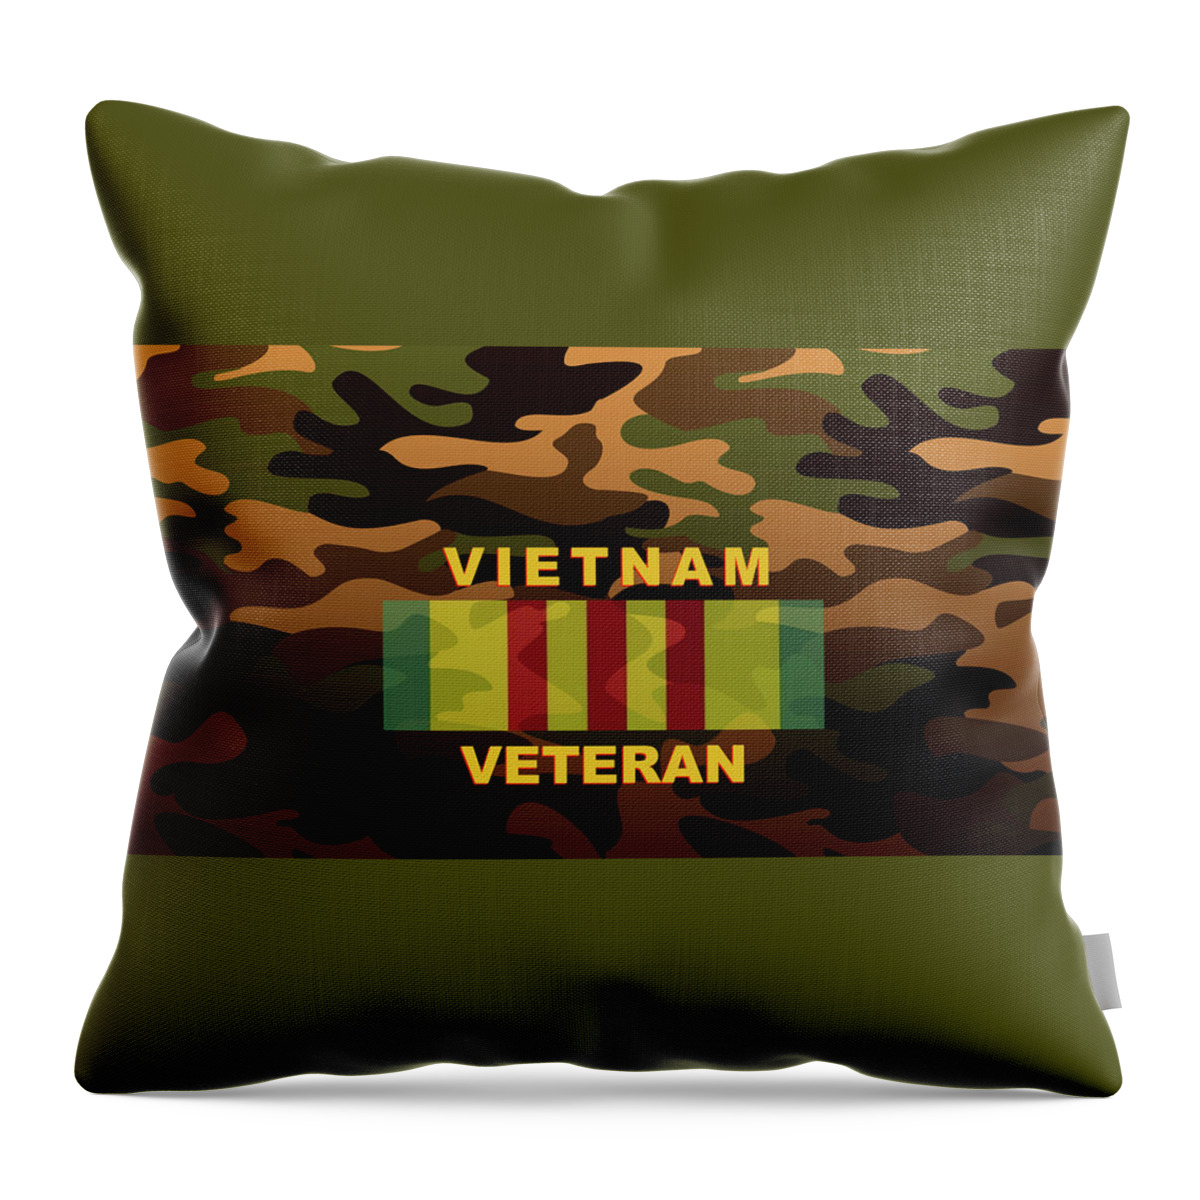 Vietnam Veteran Salute By Lloyd Deberry Throw Pillow featuring the digital art Vietnam Veteran by Lloyd DeBerry